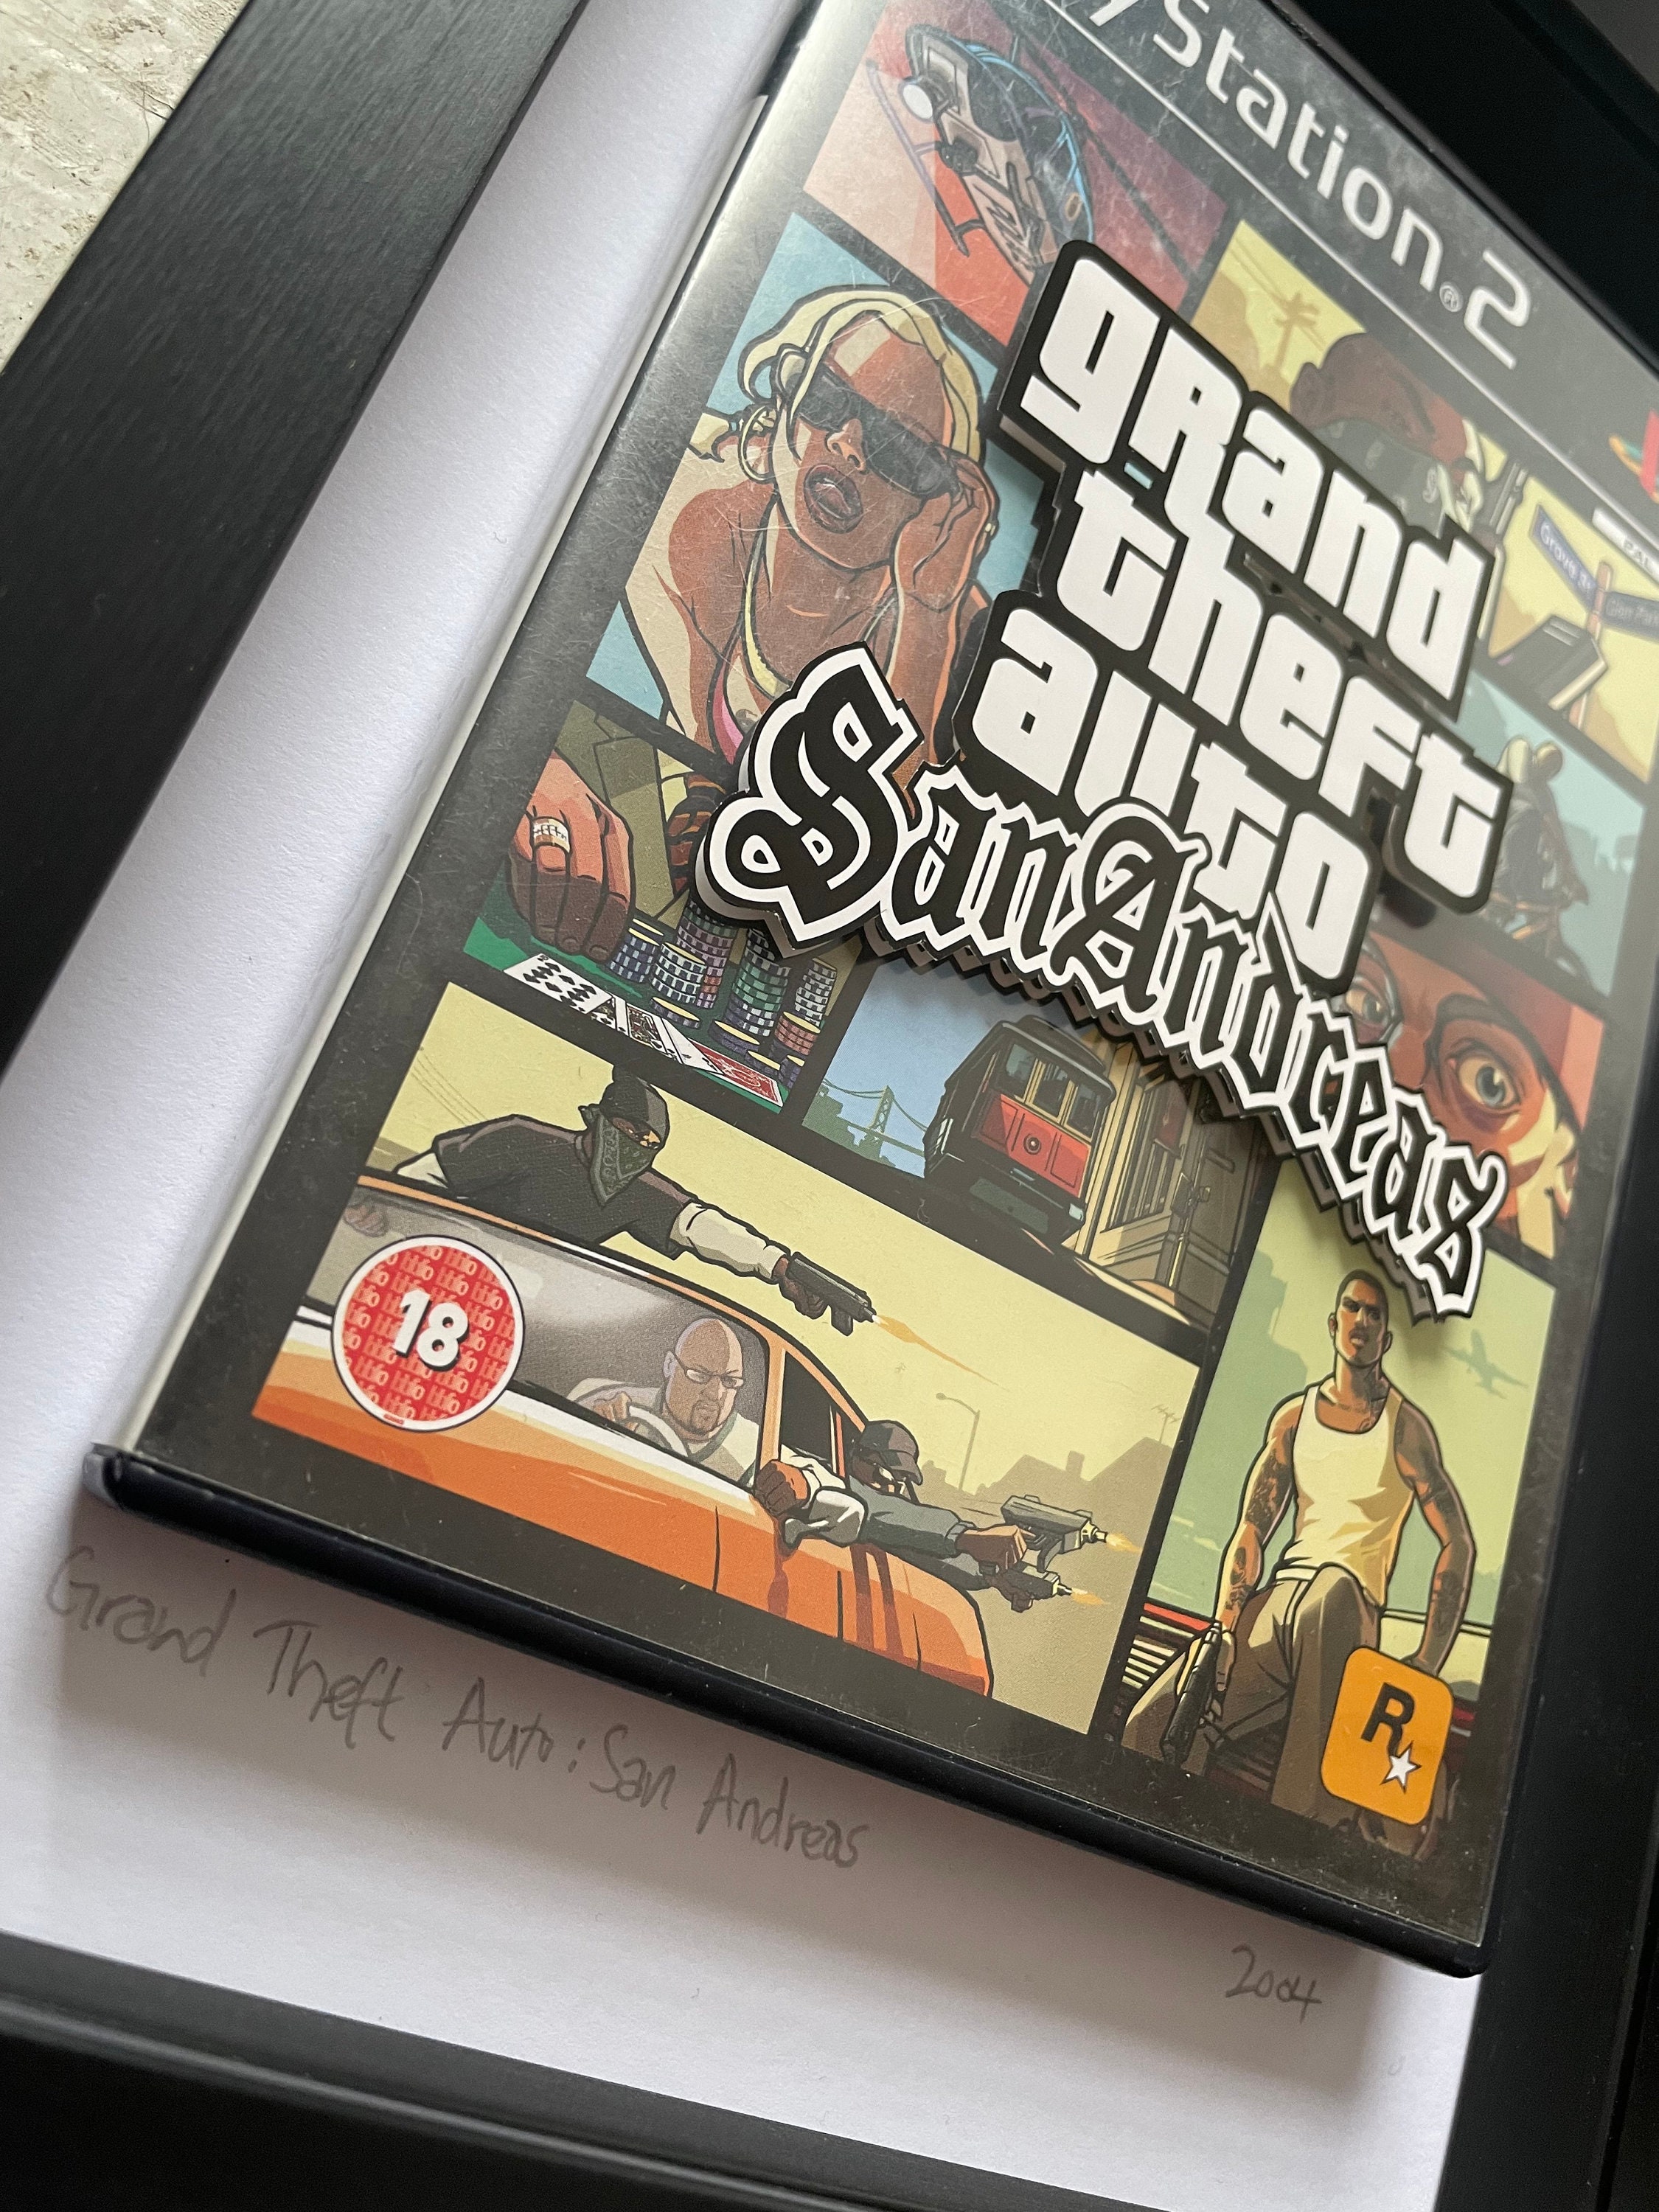 GTA San Andreas Stories PlayStation 2 Box Art Cover by ThyRedSkull